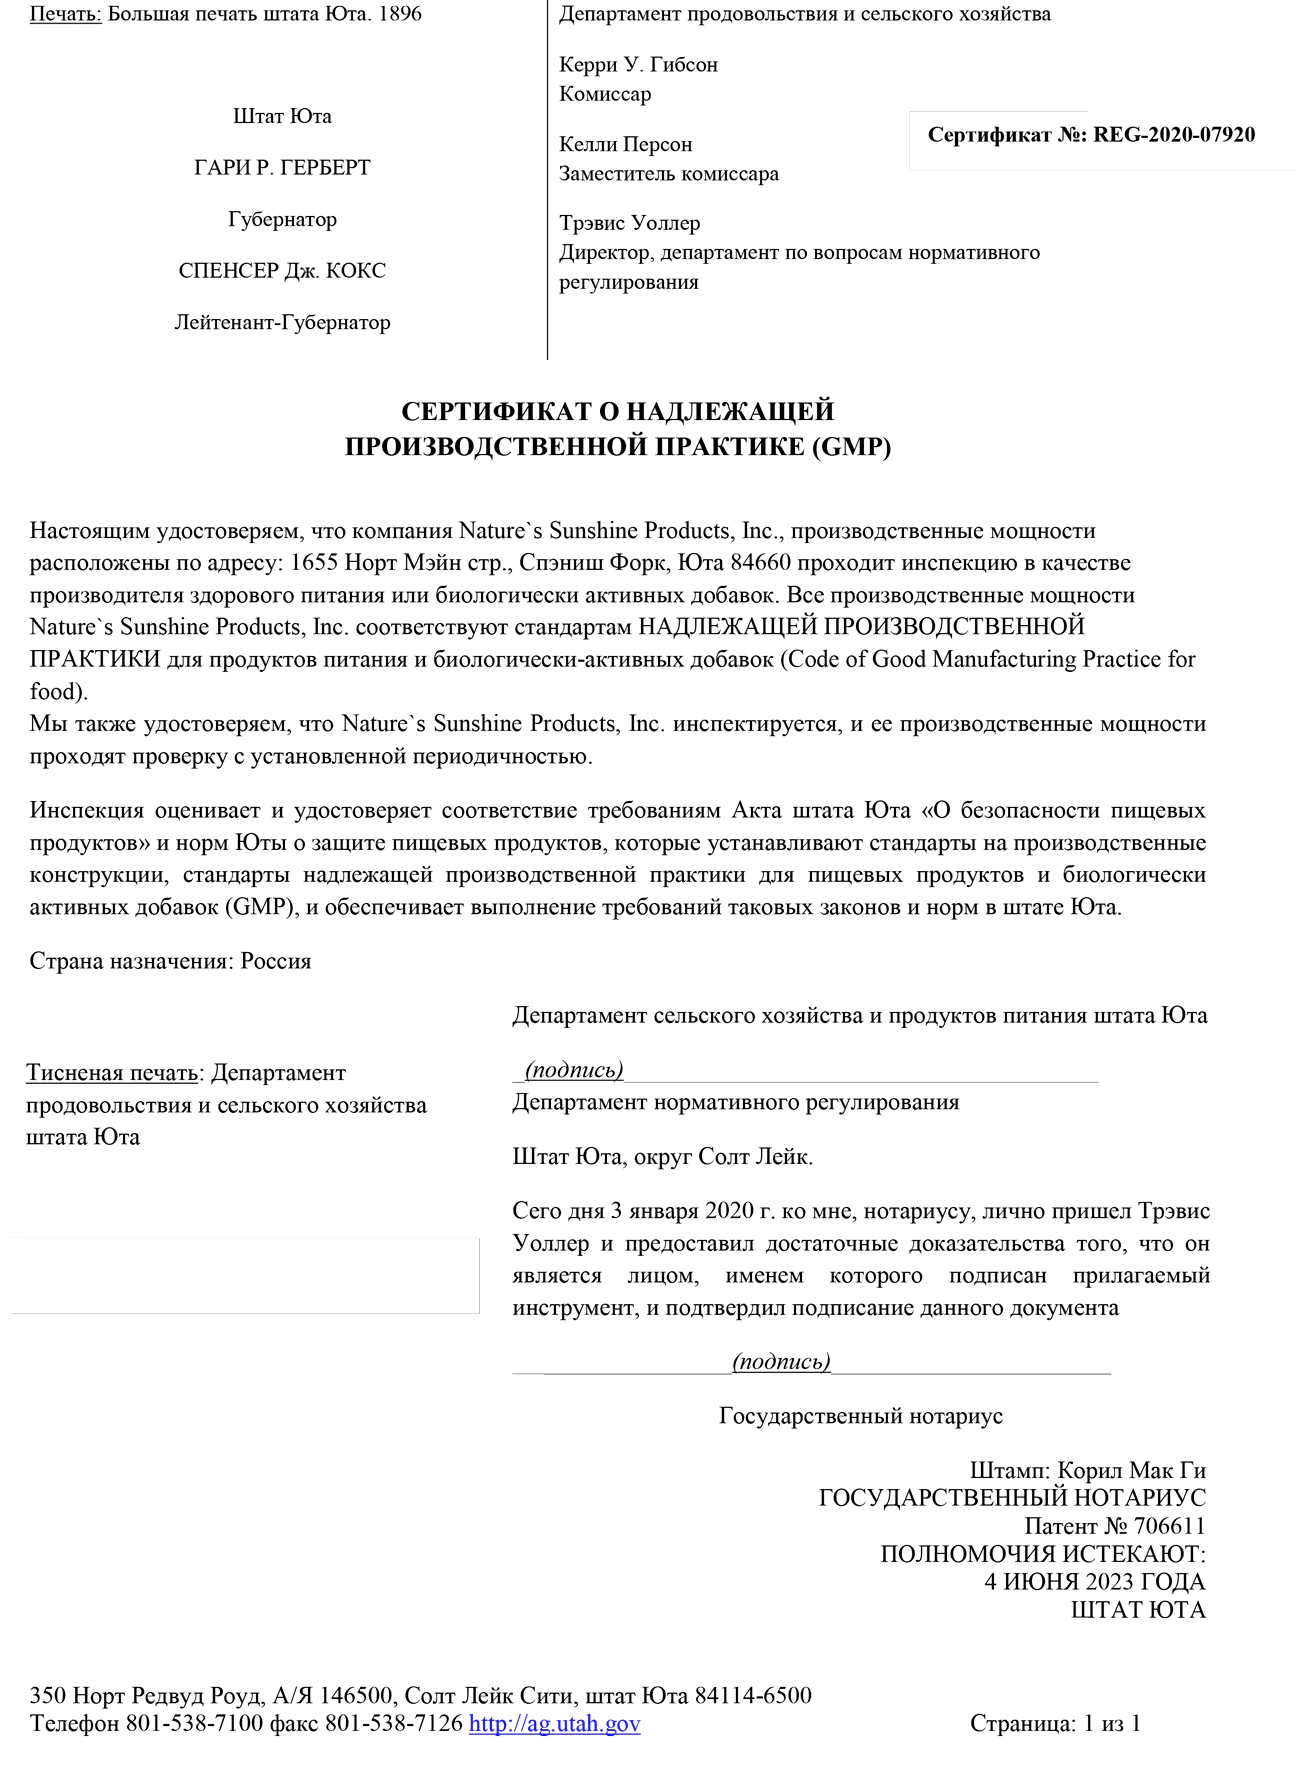 Сертифика GMP компании NSP (Nature's Sunshine Products) | NSP-MOLDOVA.MD